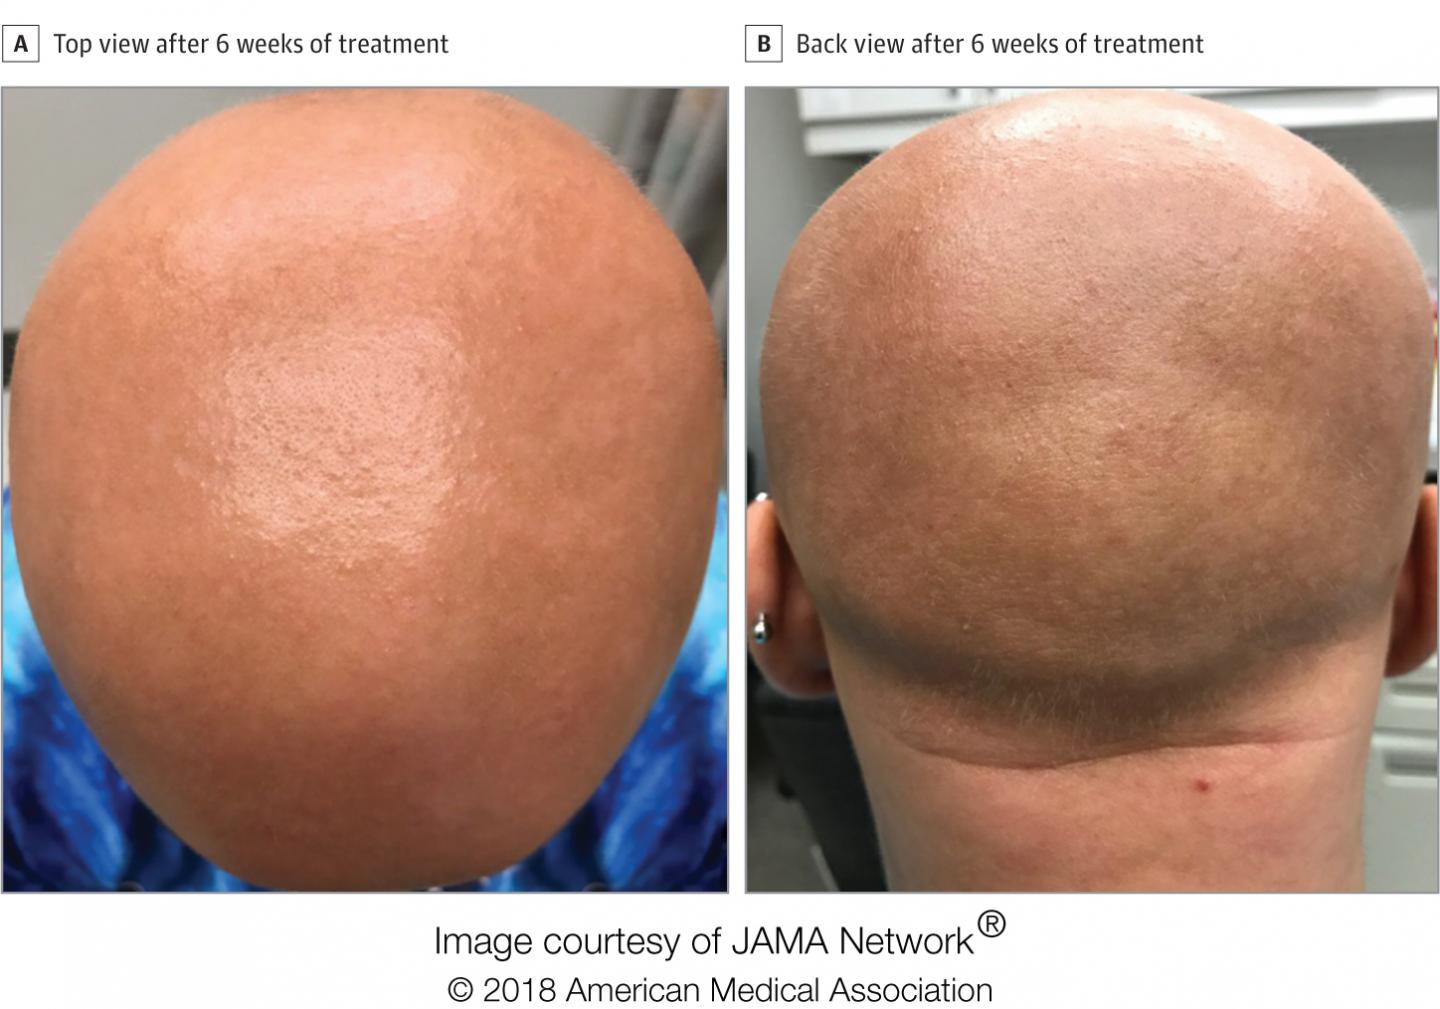 Eczema drug restores hair growth in patient w | EurekAlert!